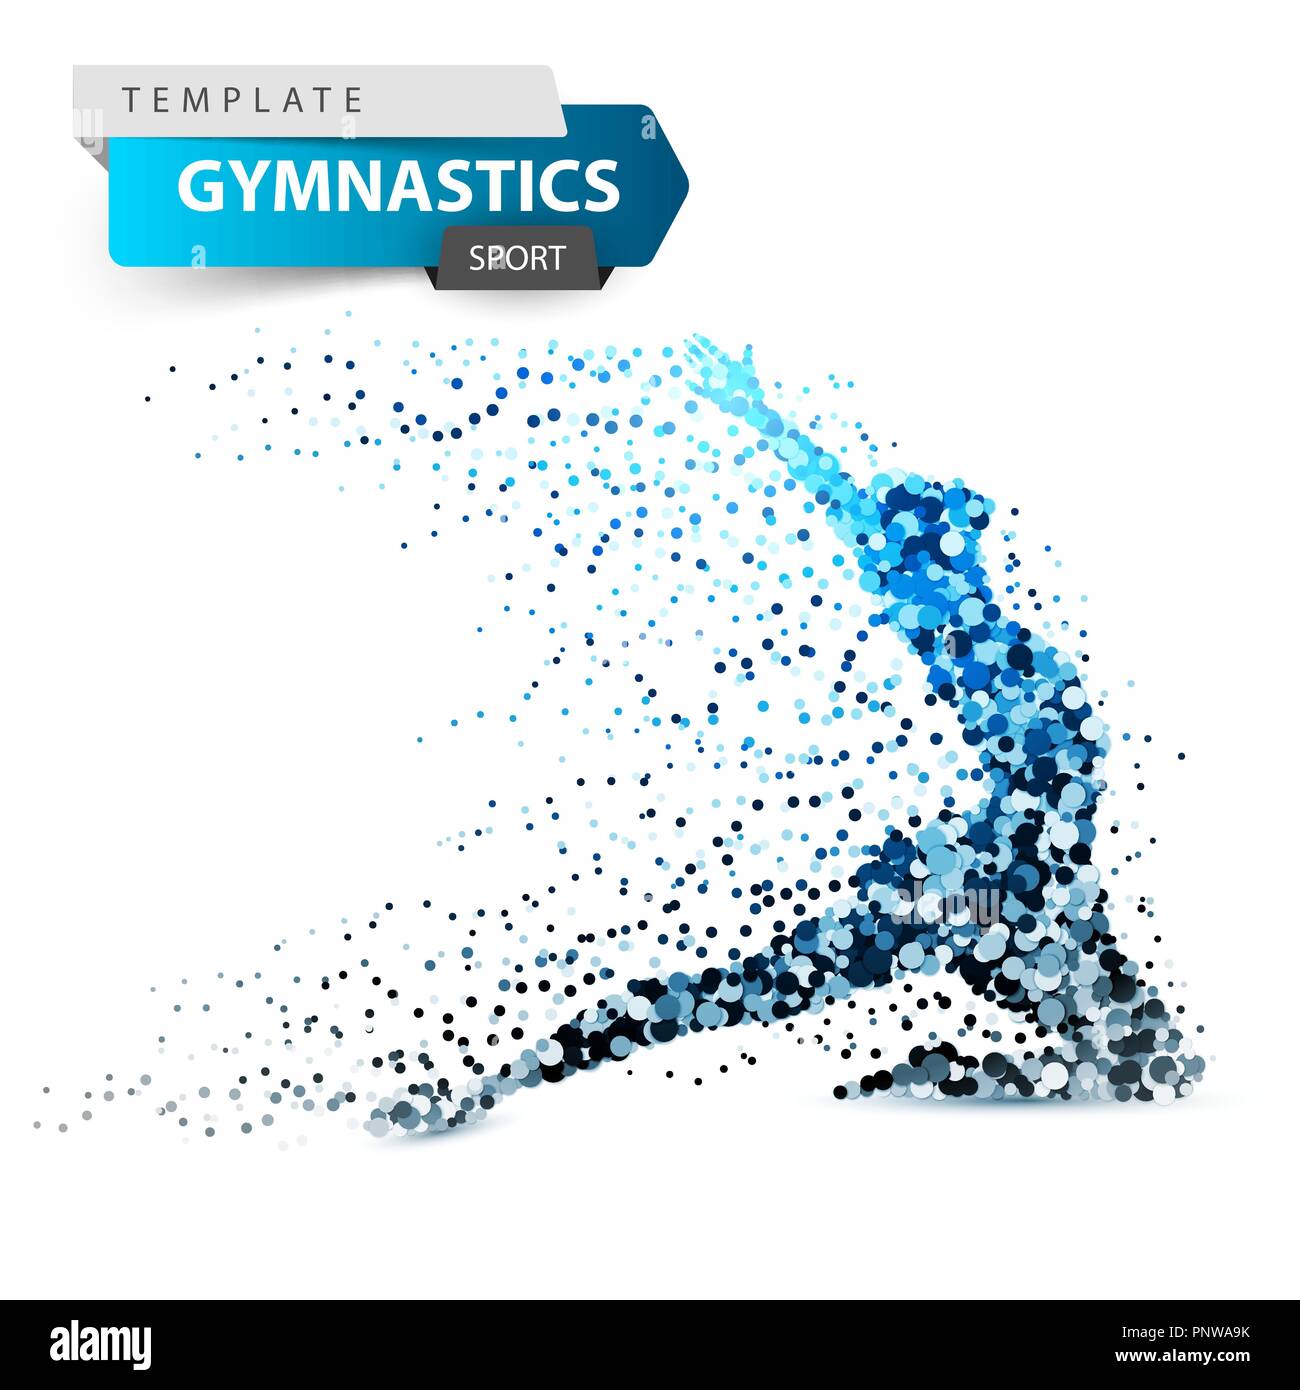 Gymnastics, sport - dot illustration on the white background. Stock Vector